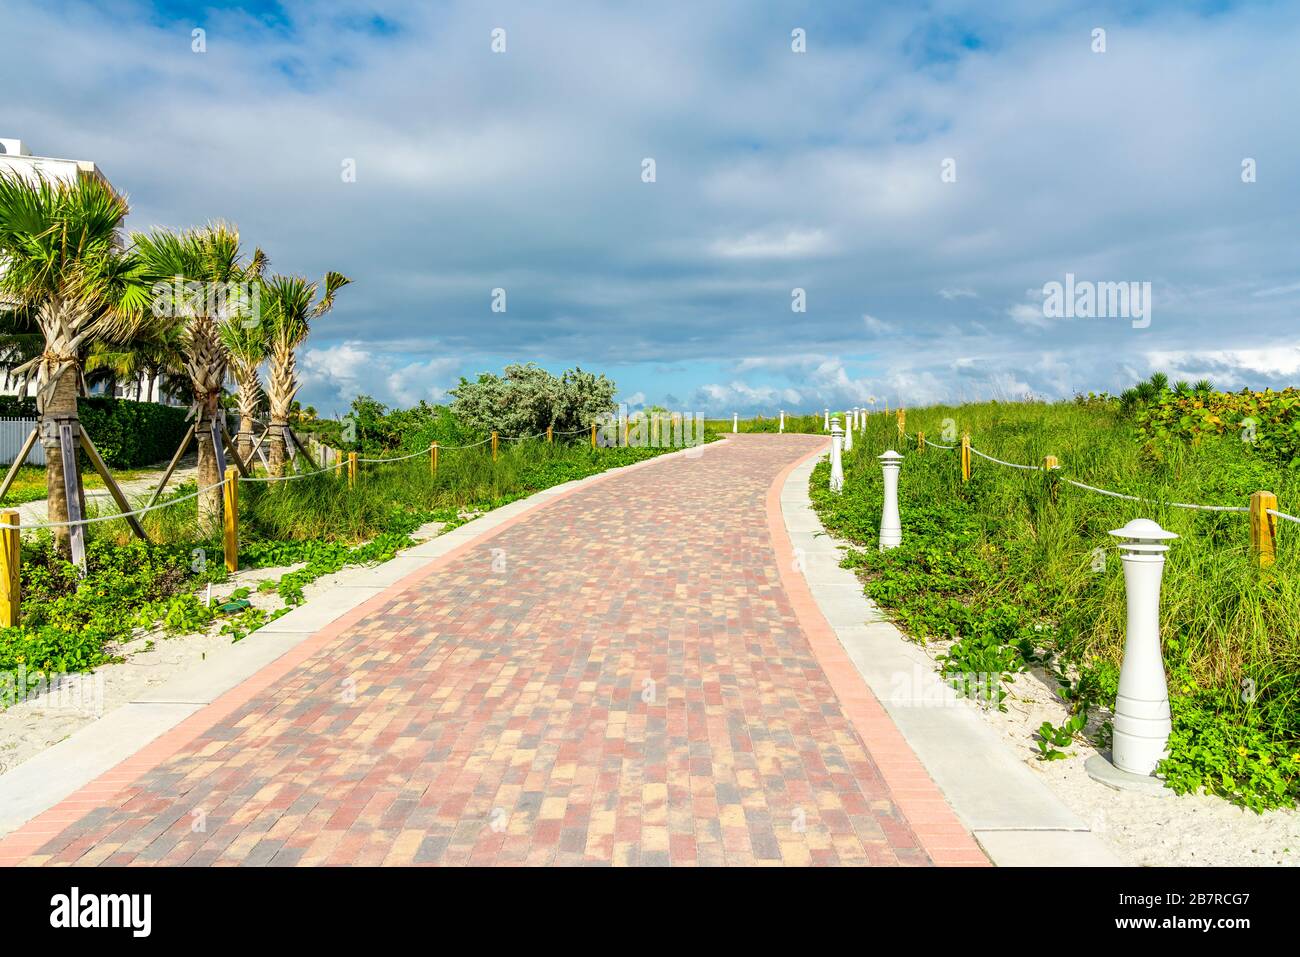 Walkway with palm trees in Miami beach, Florida Stock Photo